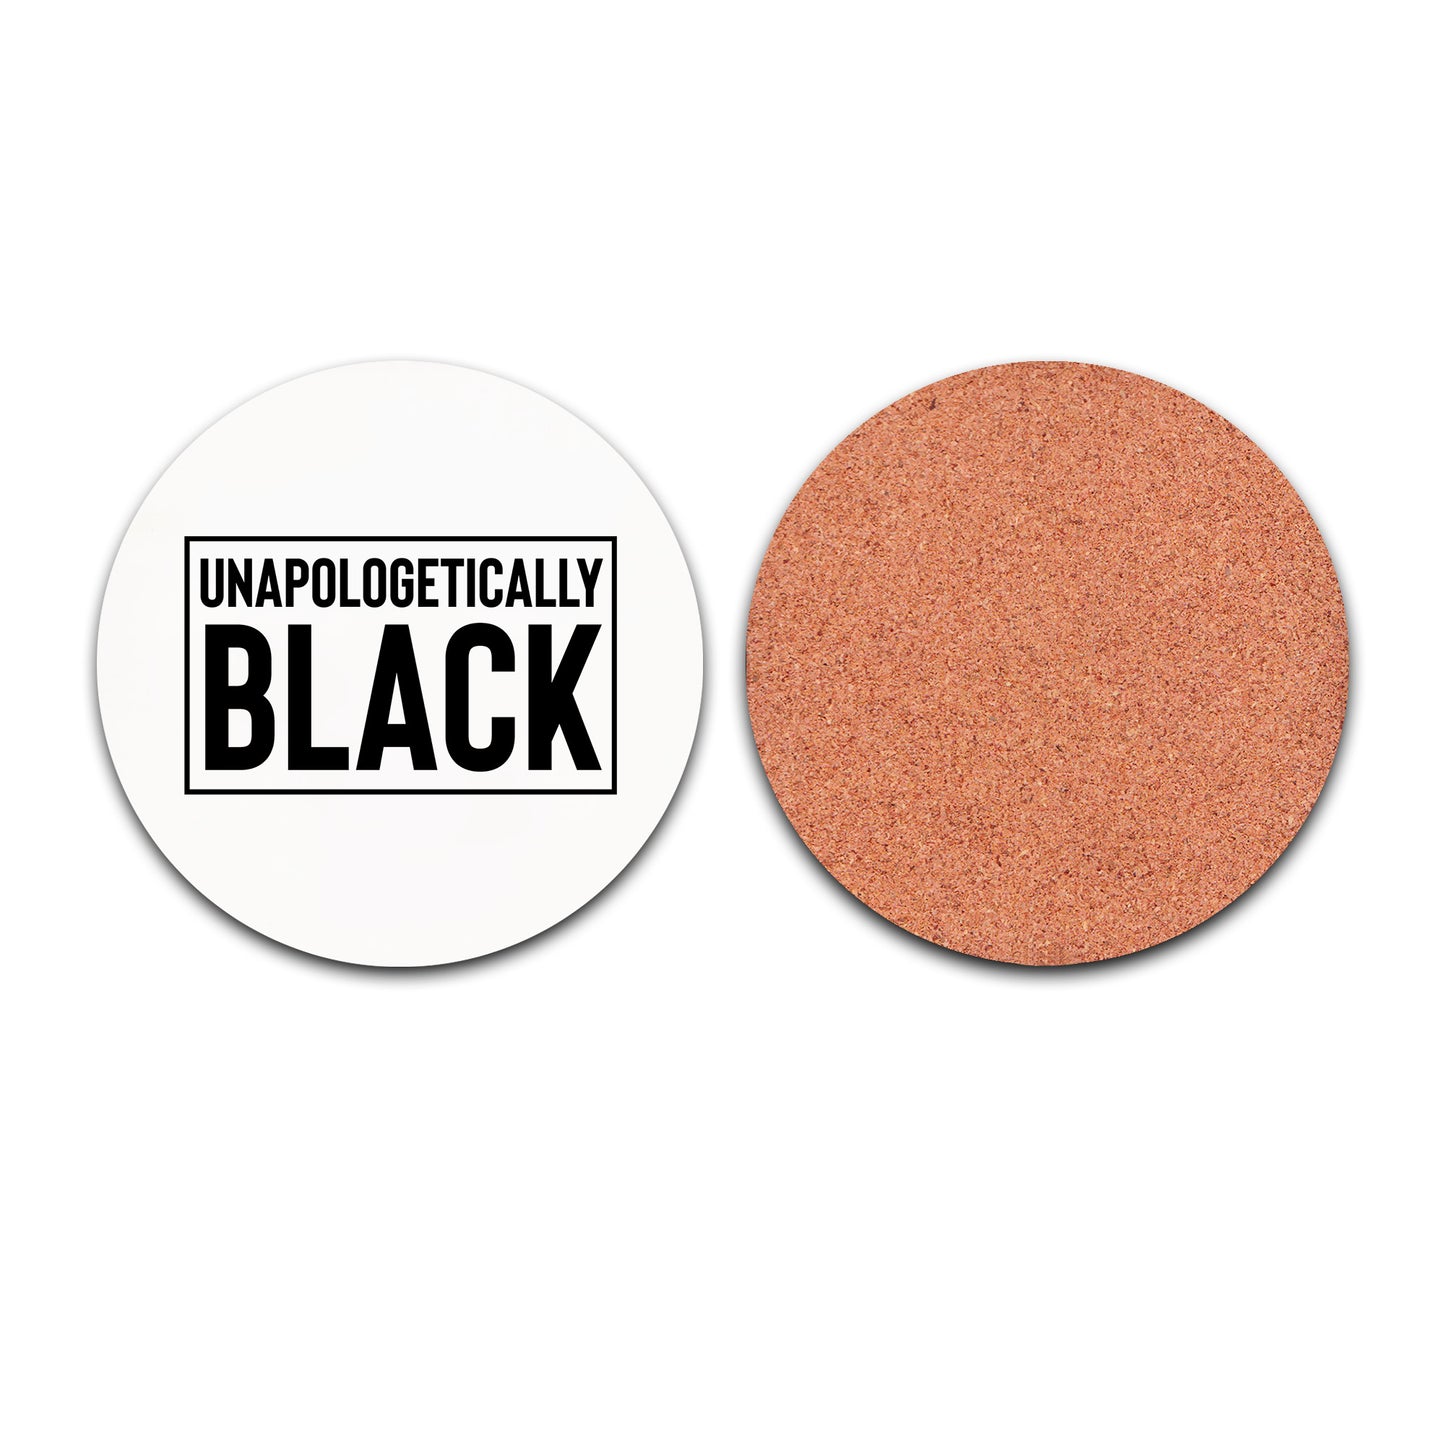 Black an White 3.5"x3.5" Unapologetically Black Round Coaster